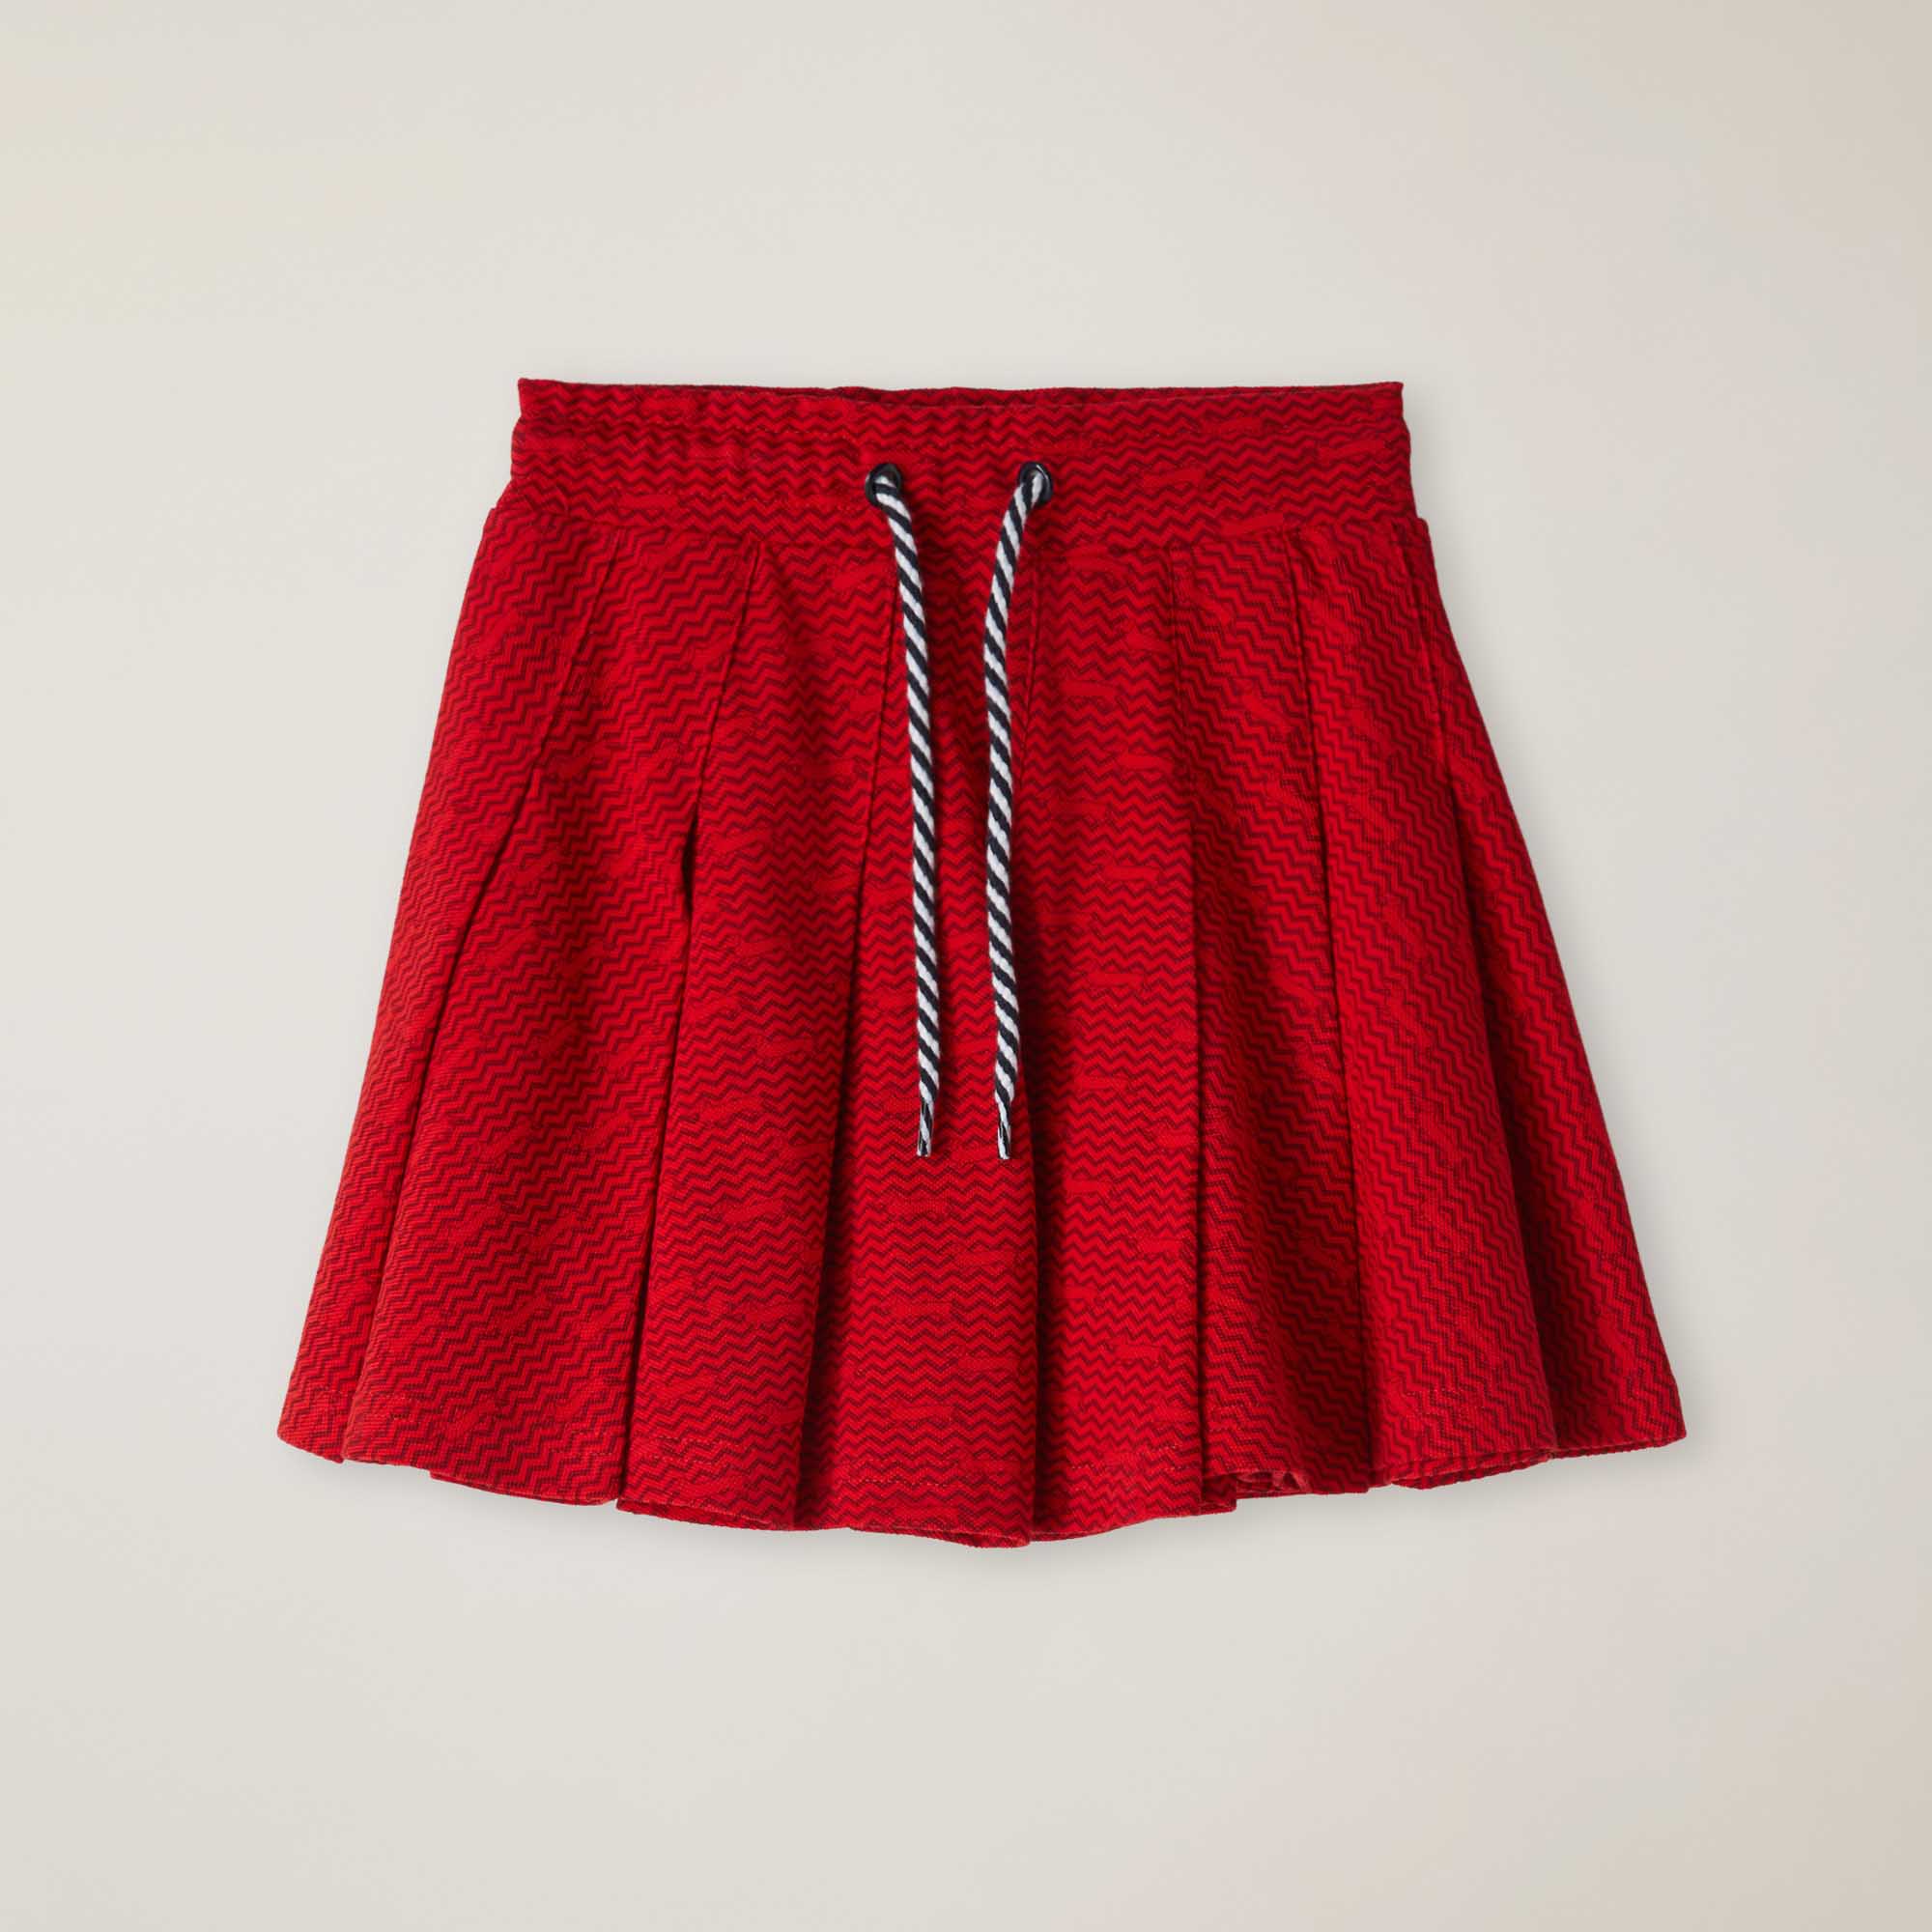 Micro-patterned print skirt